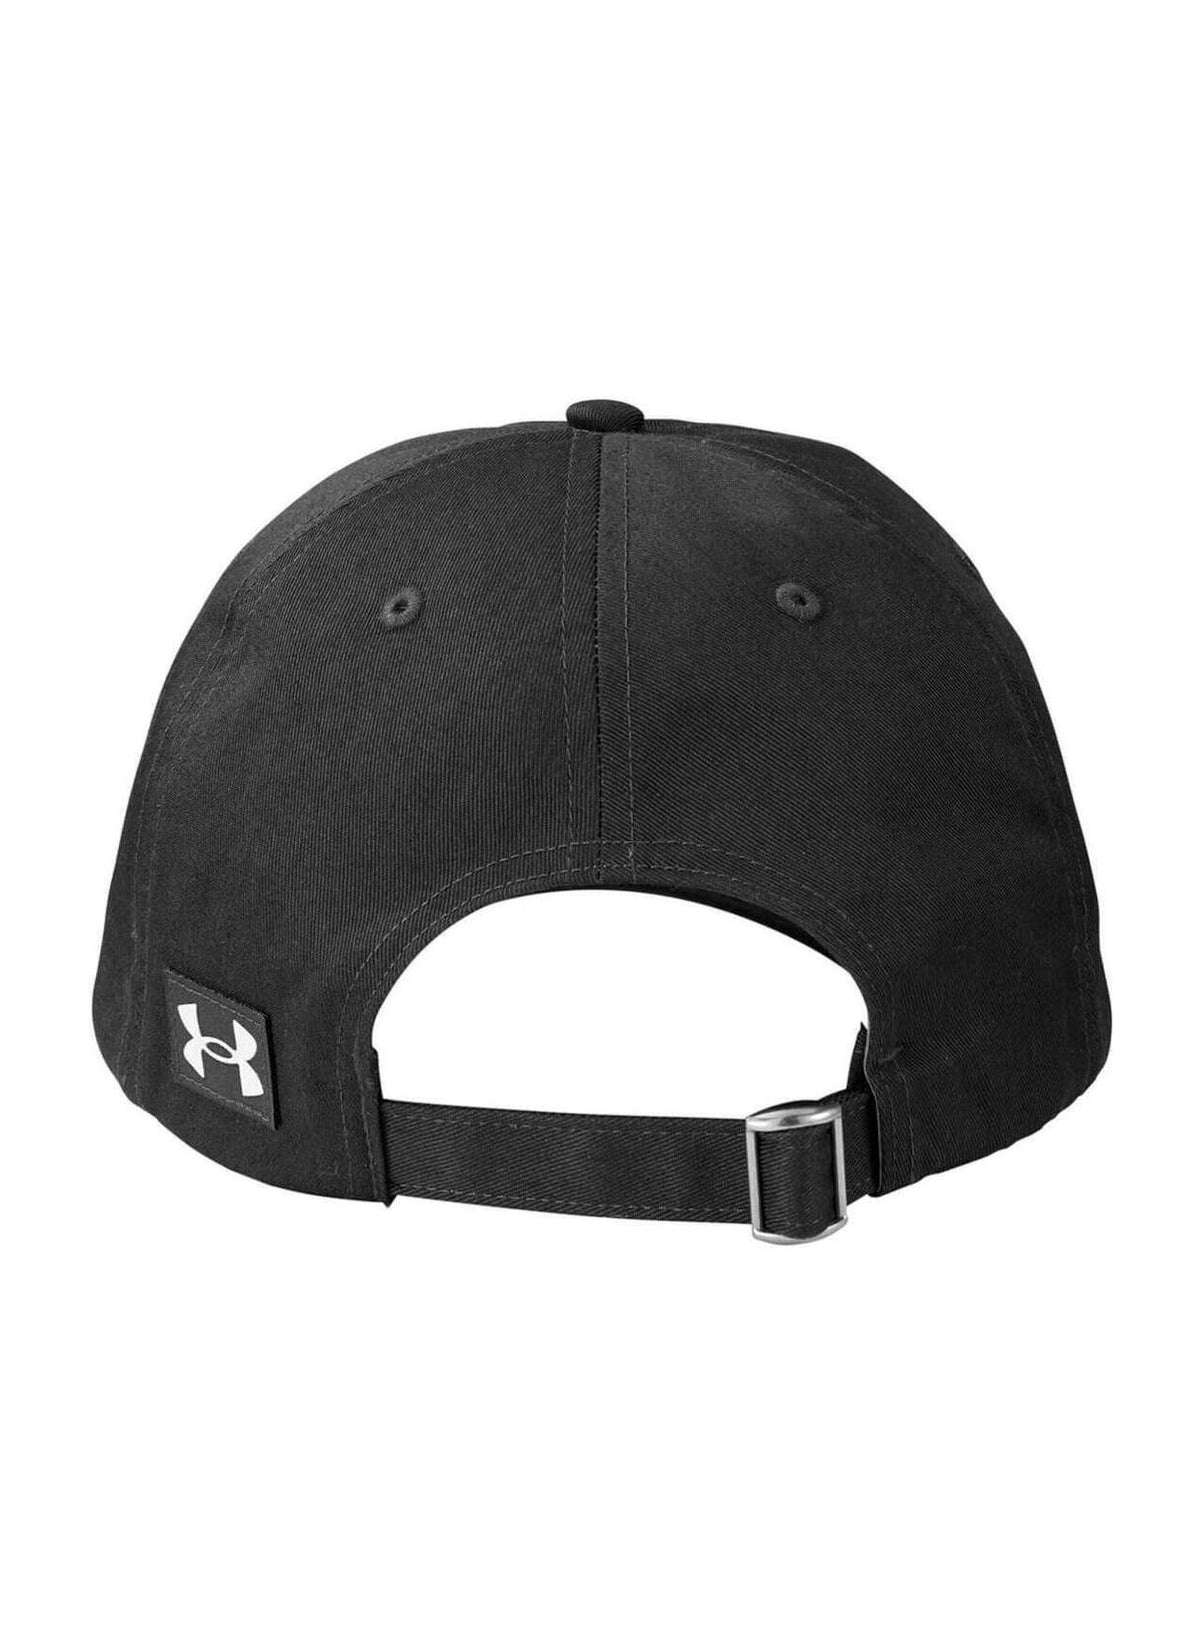 Under Armour Black Team Chino Hat |  Under Armour黑色鴨舌帽